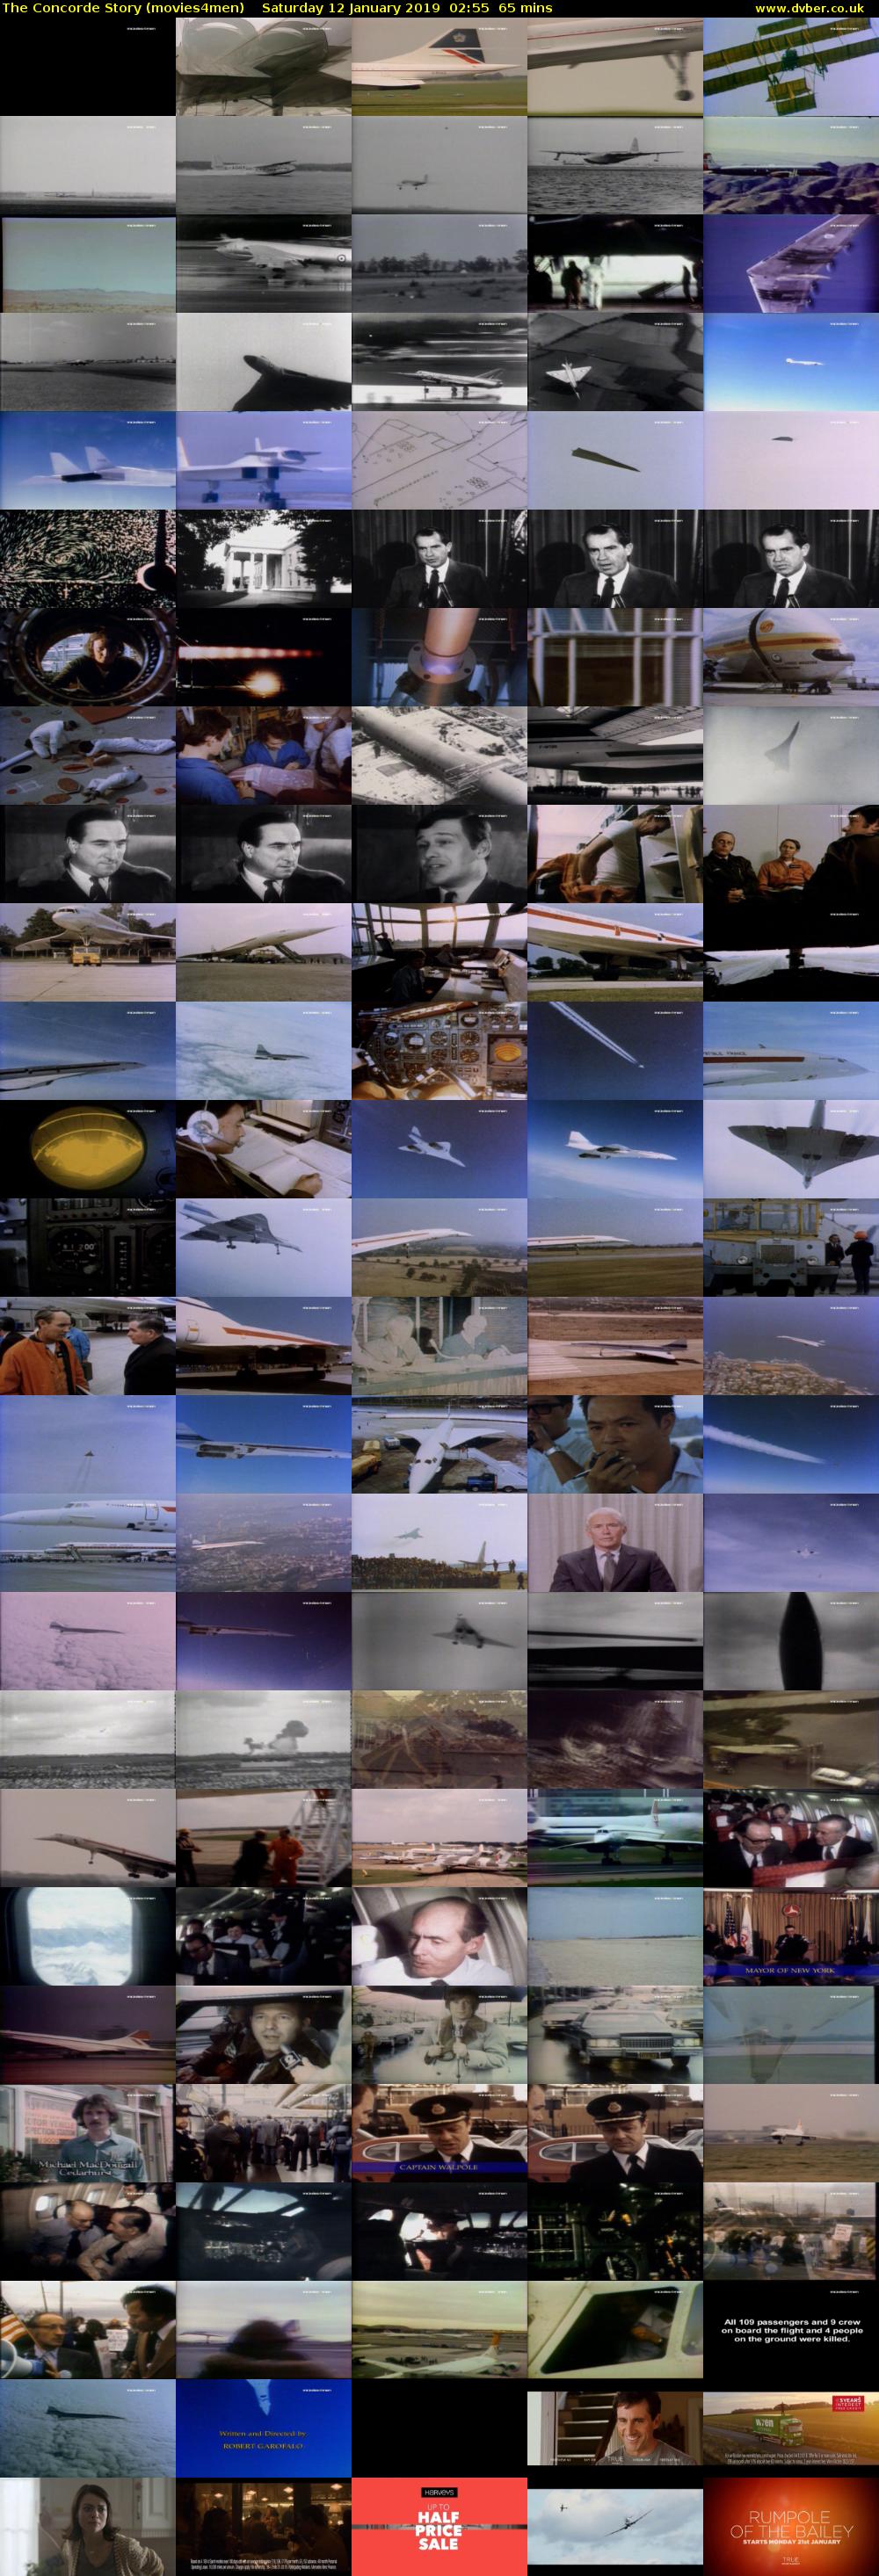 The Concorde Story (movies4men) Saturday 12 January 2019 02:55 - 04:00